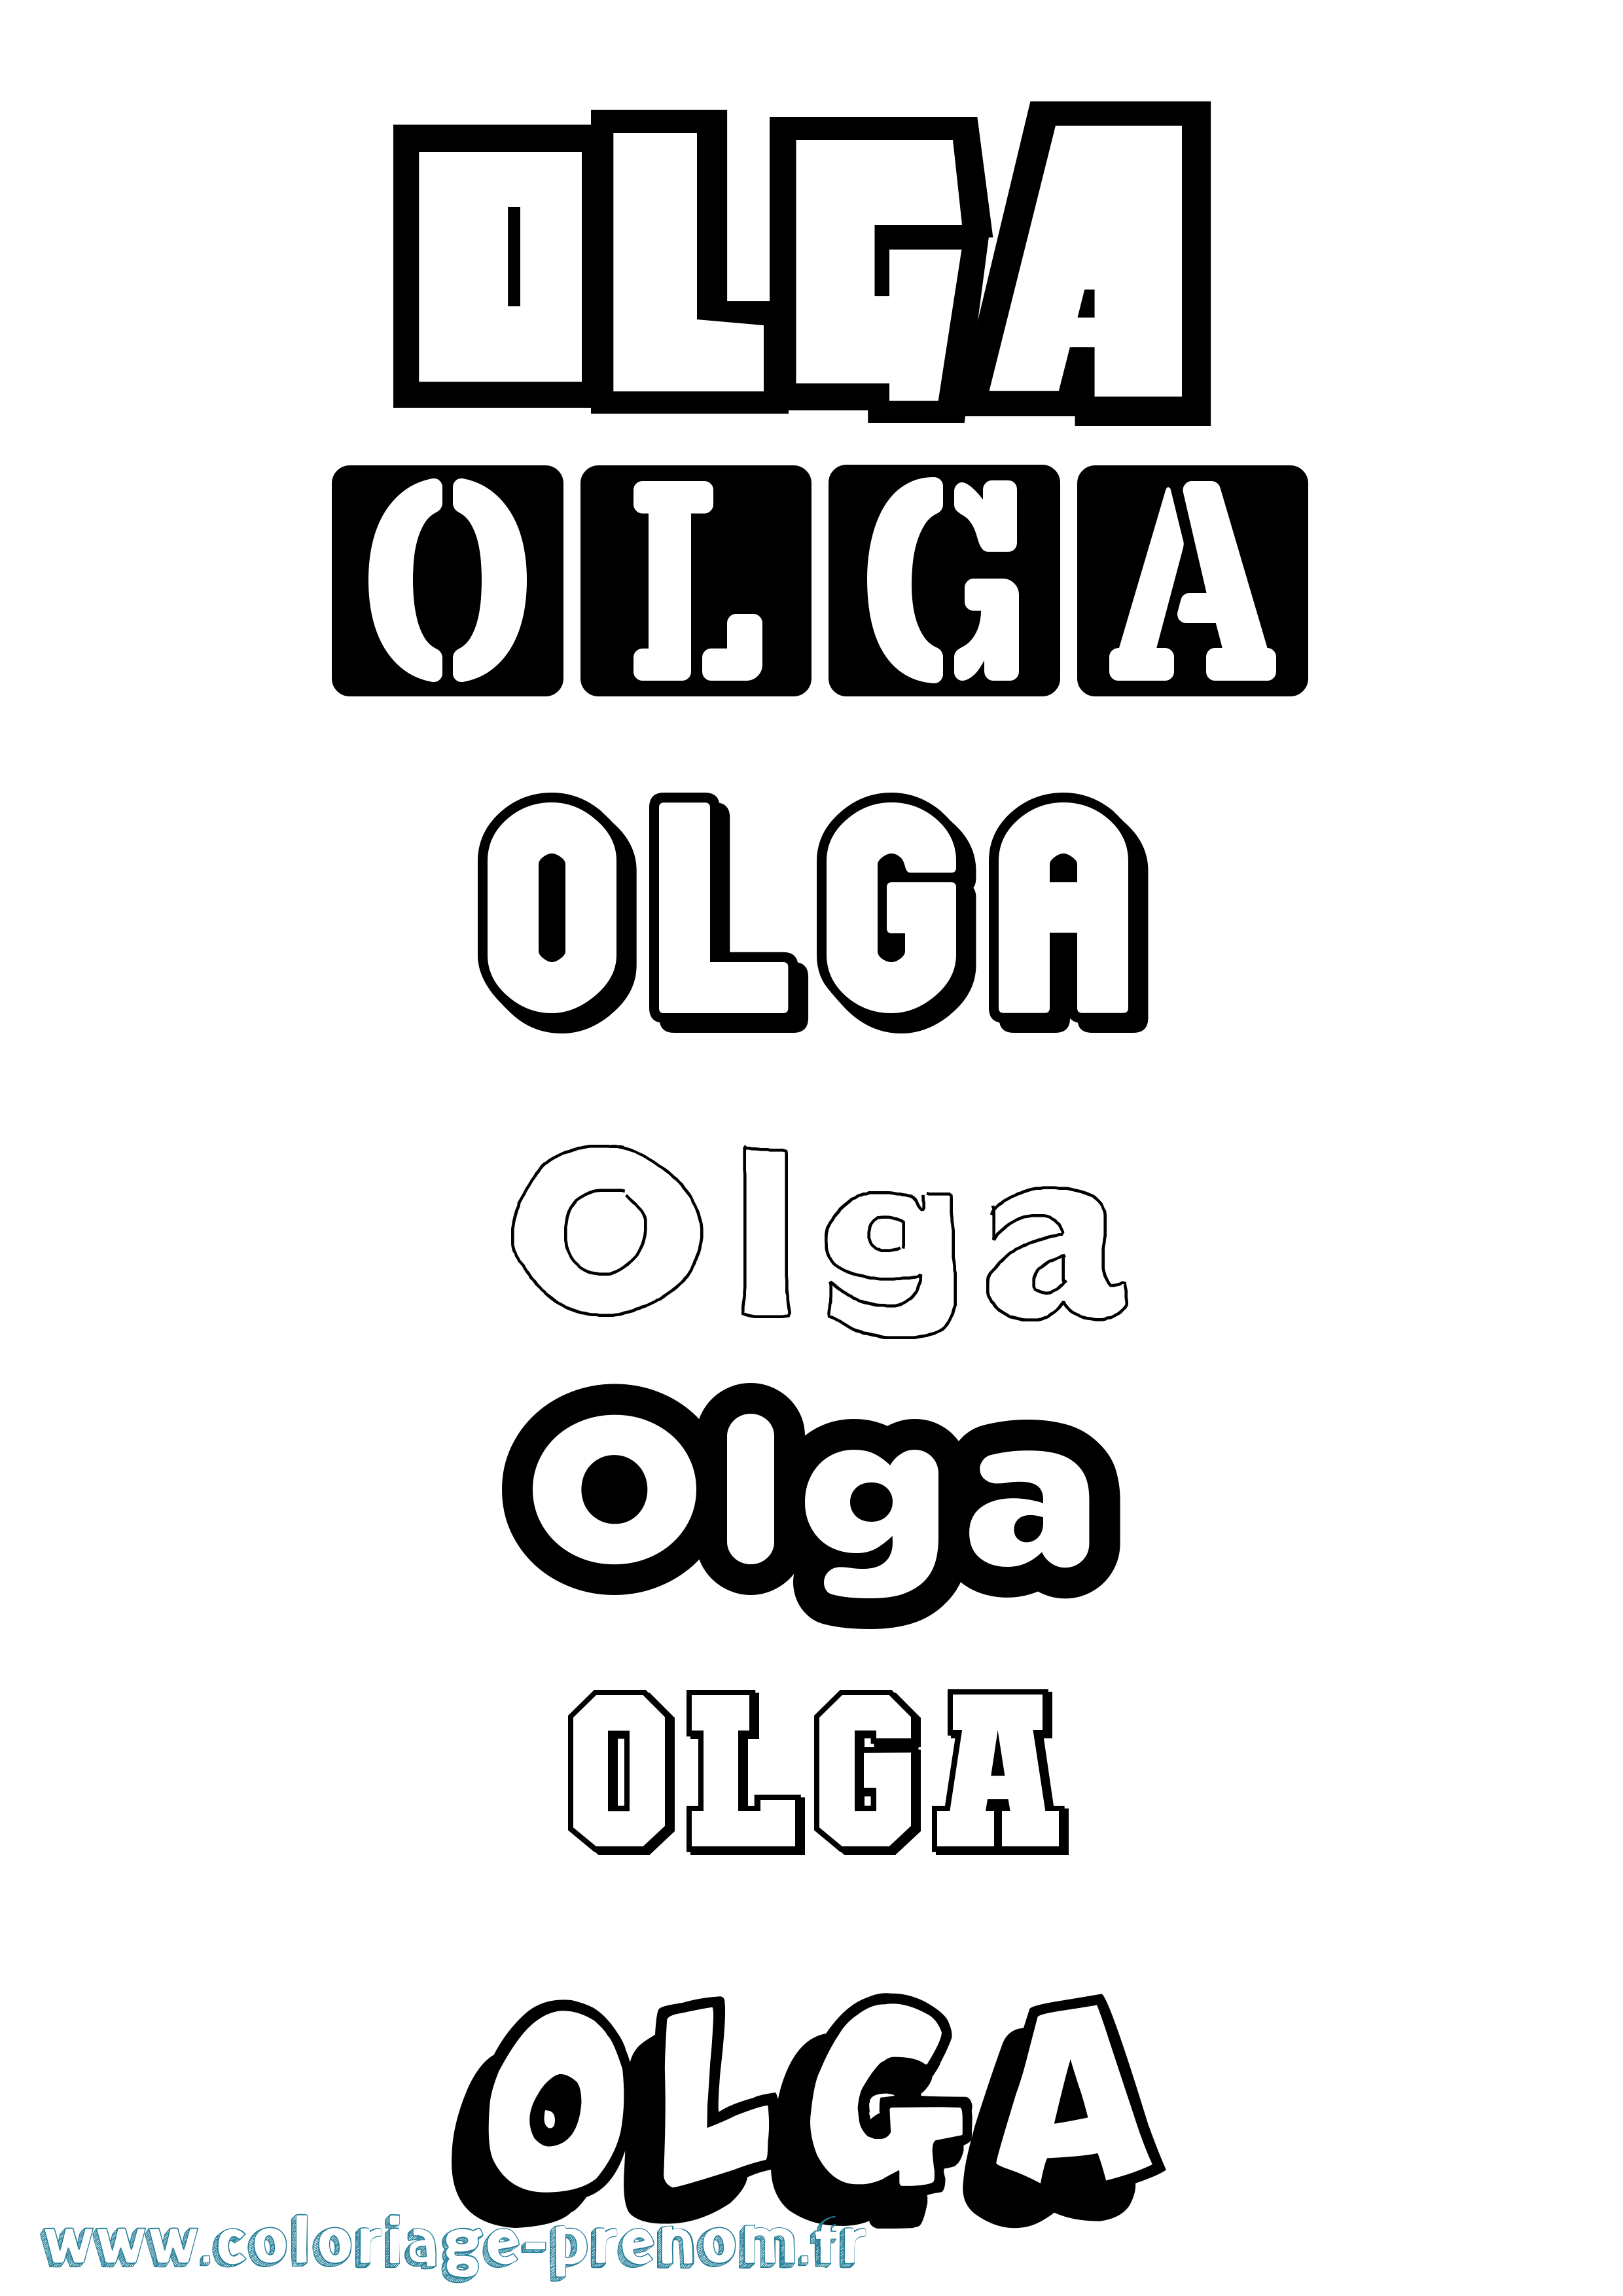 Coloriage prénom Olga